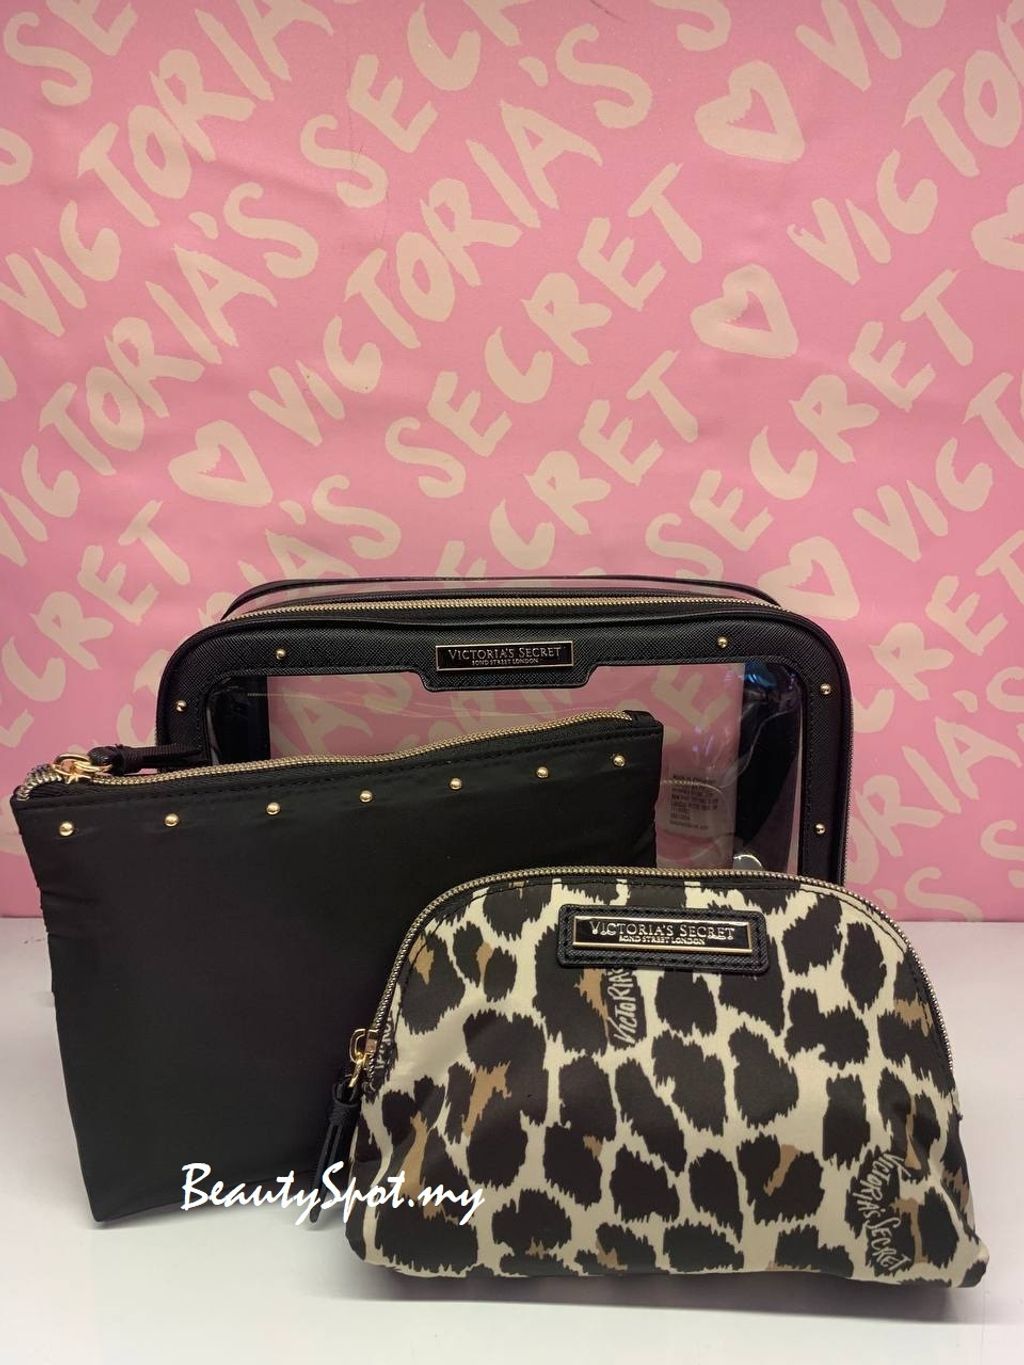 Victoria's Secret Beauty-To-Go Bag Trio - Black Leopard